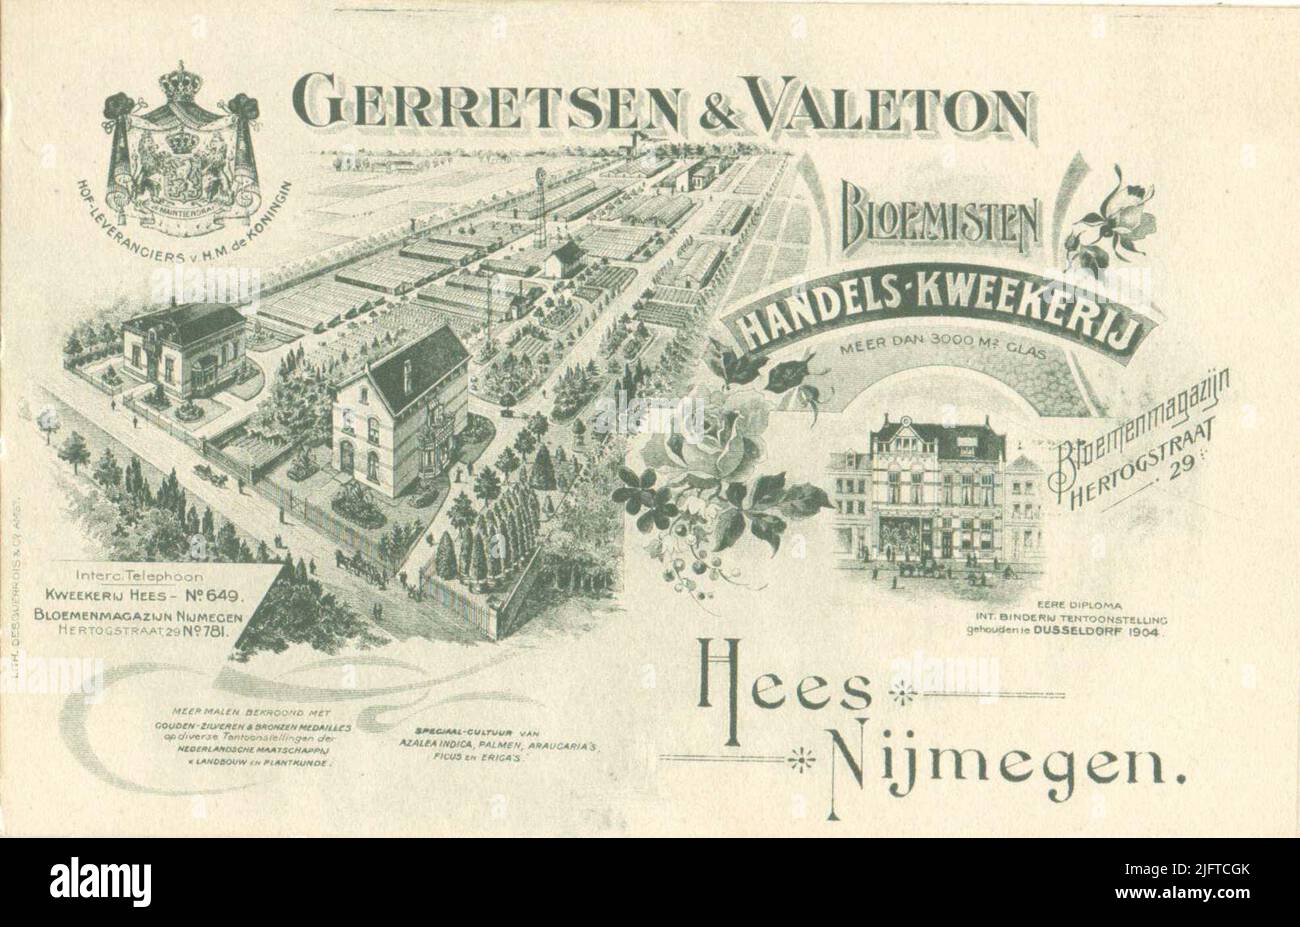 An advertising card from Bloemisterij & Handelskwekerij of the Gerretsen & Valeton fa. Stock Photo